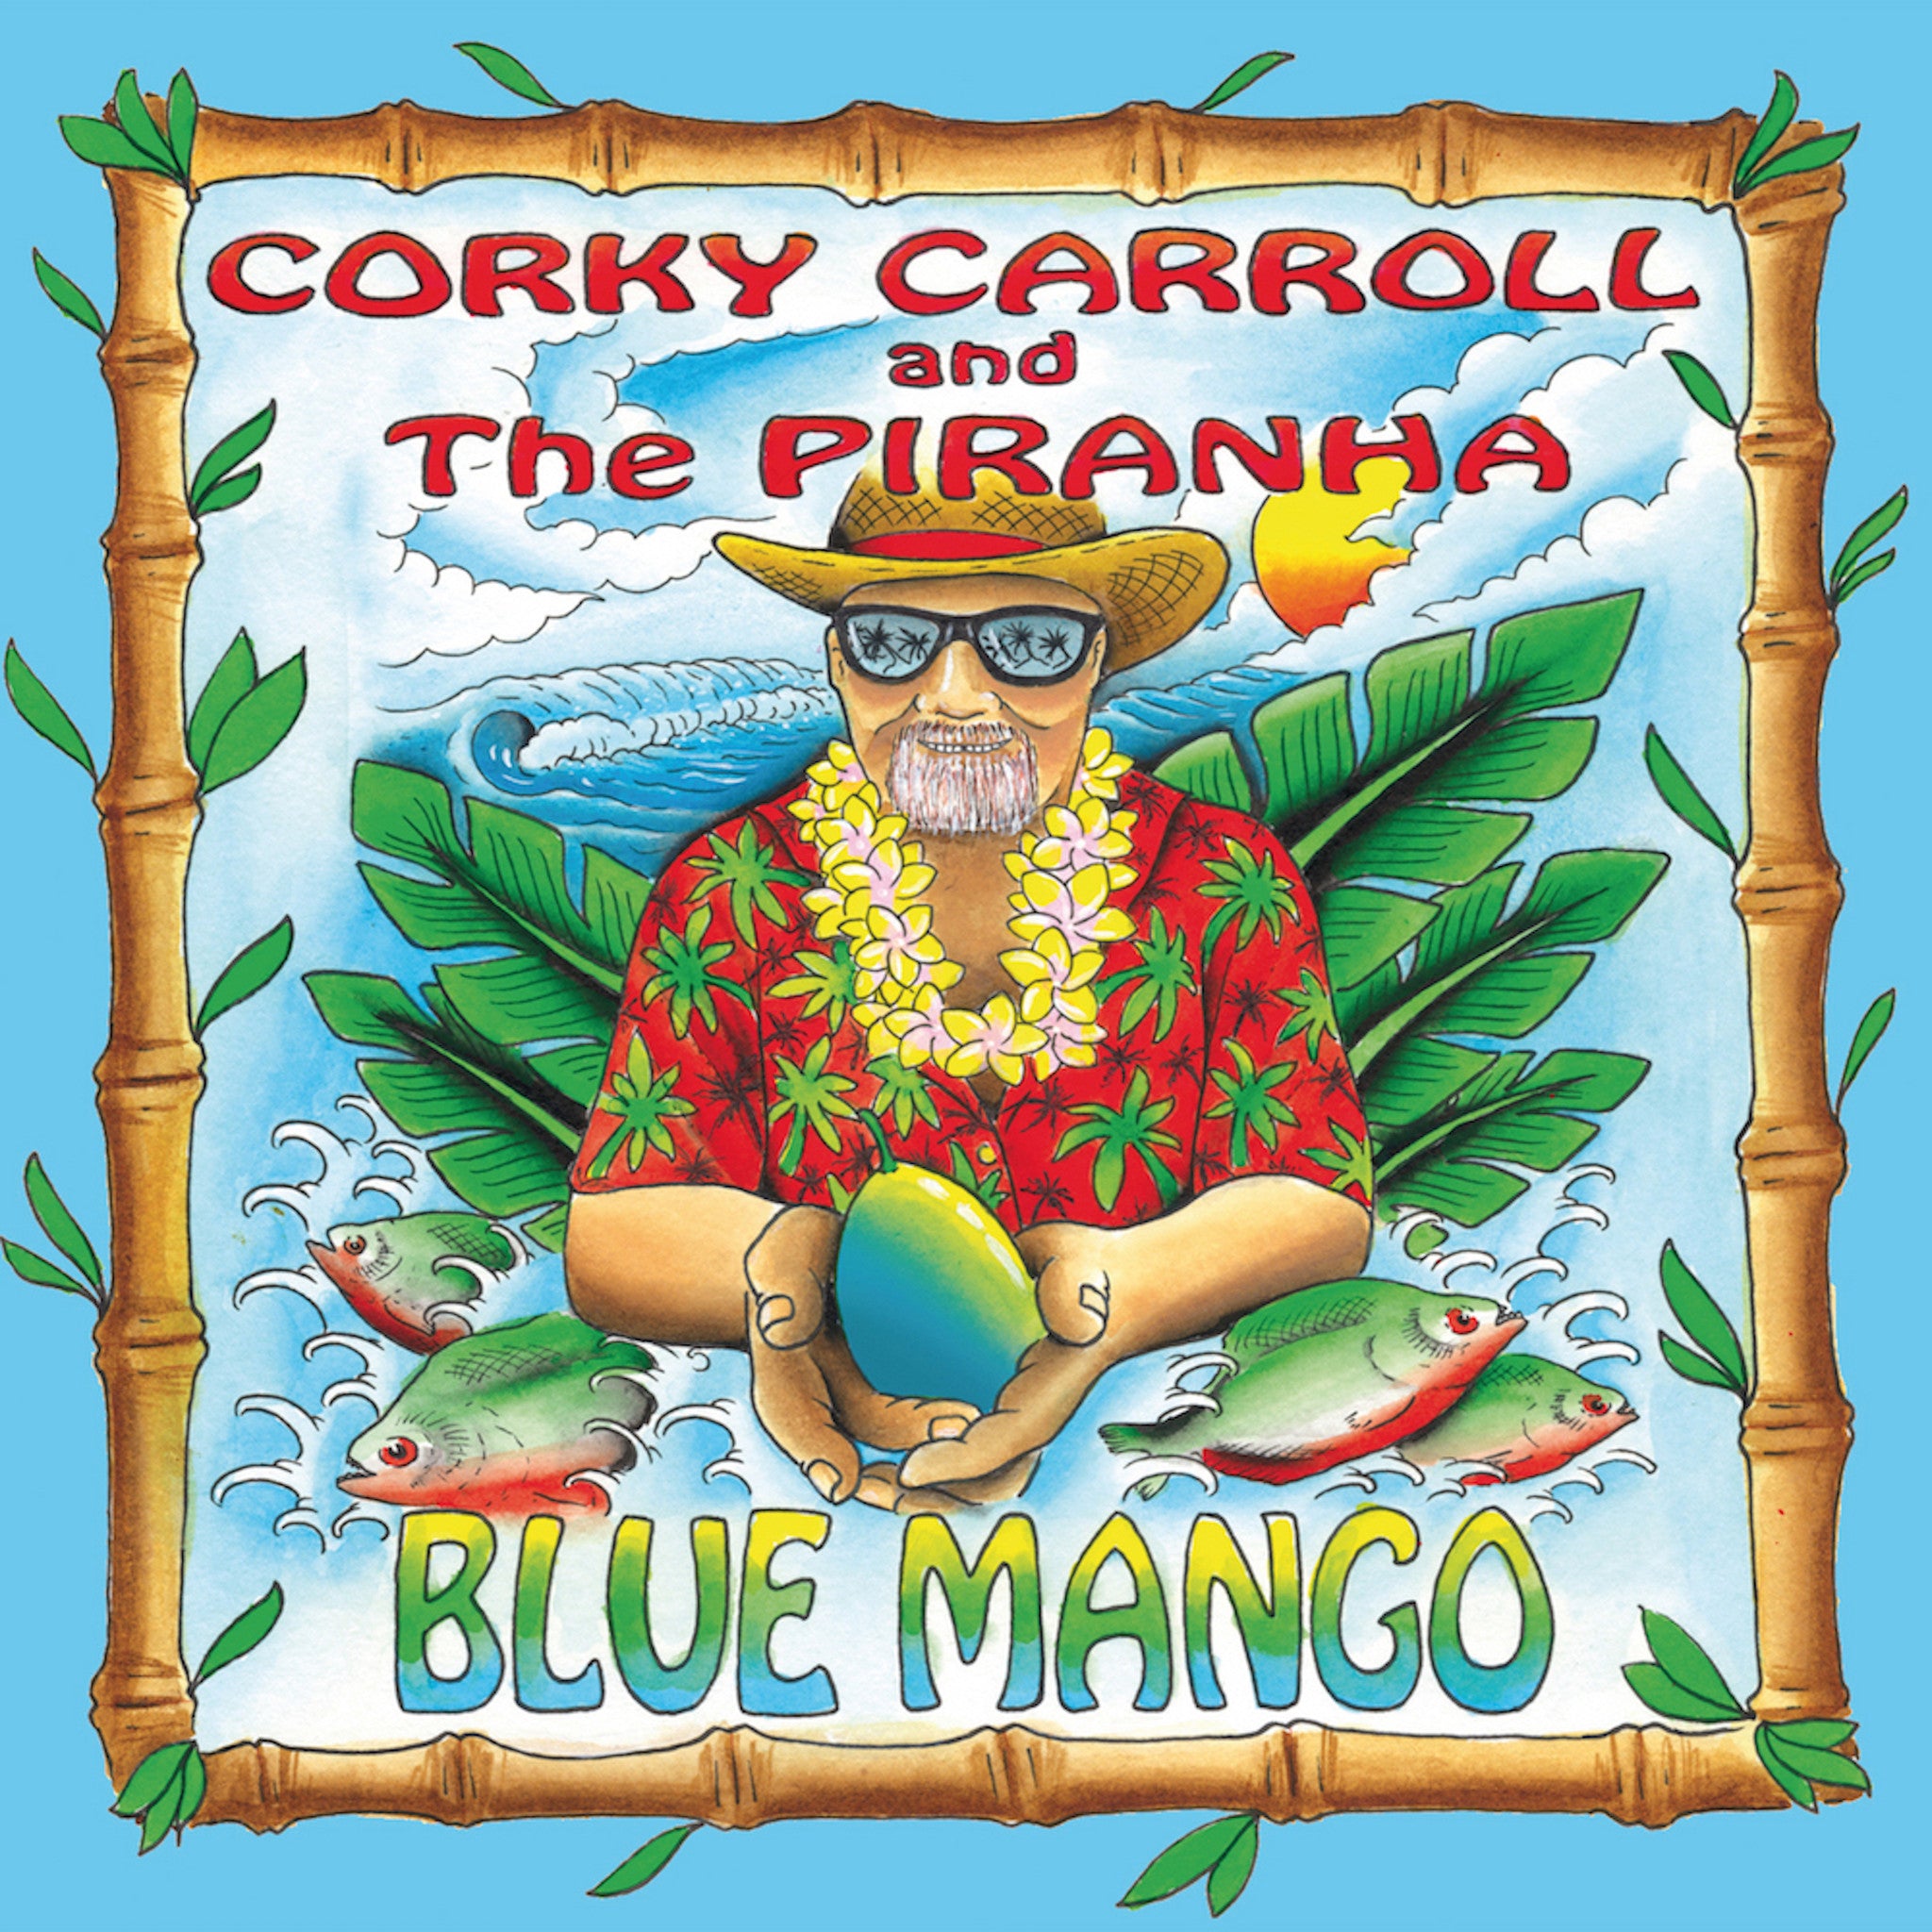 Corky Carroll and the Piranha - Blue Mango